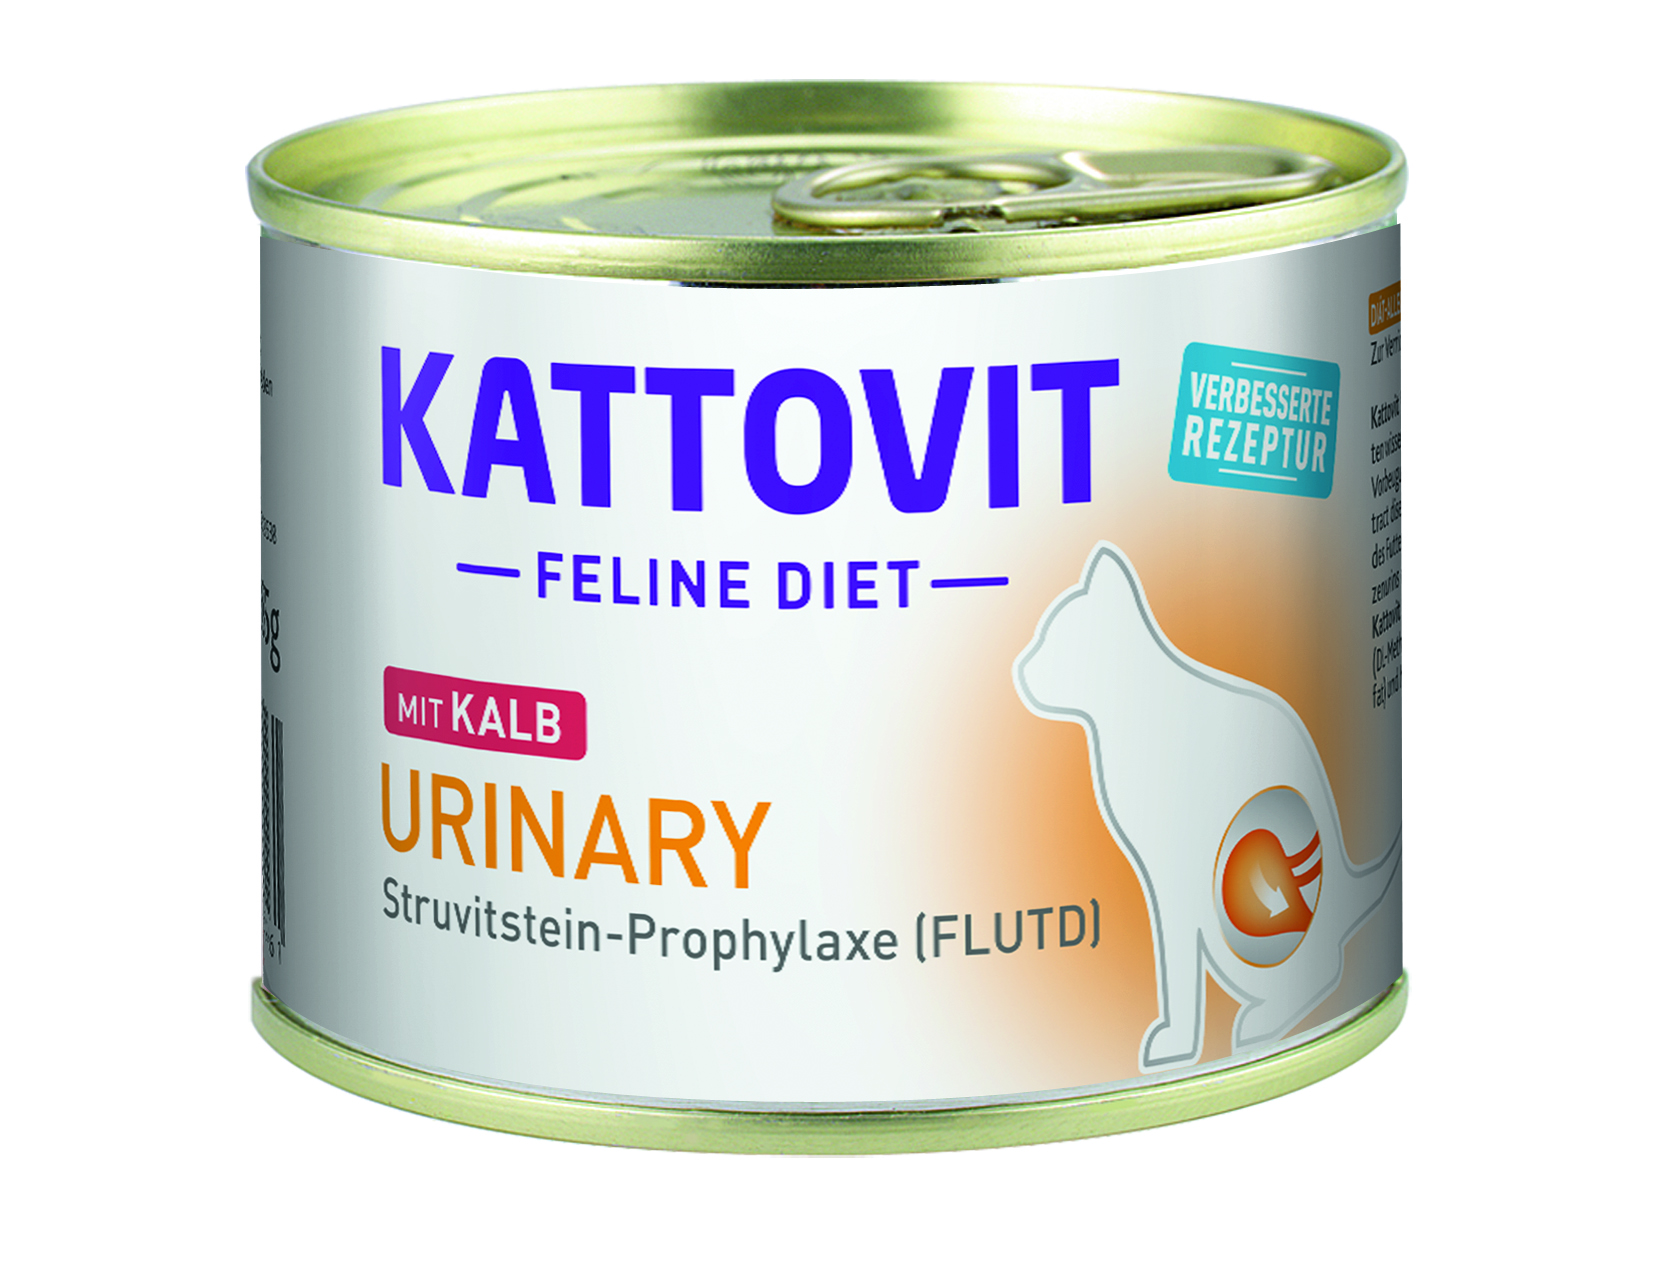 Kattovit Feline Diet Urinary Kalb 185g